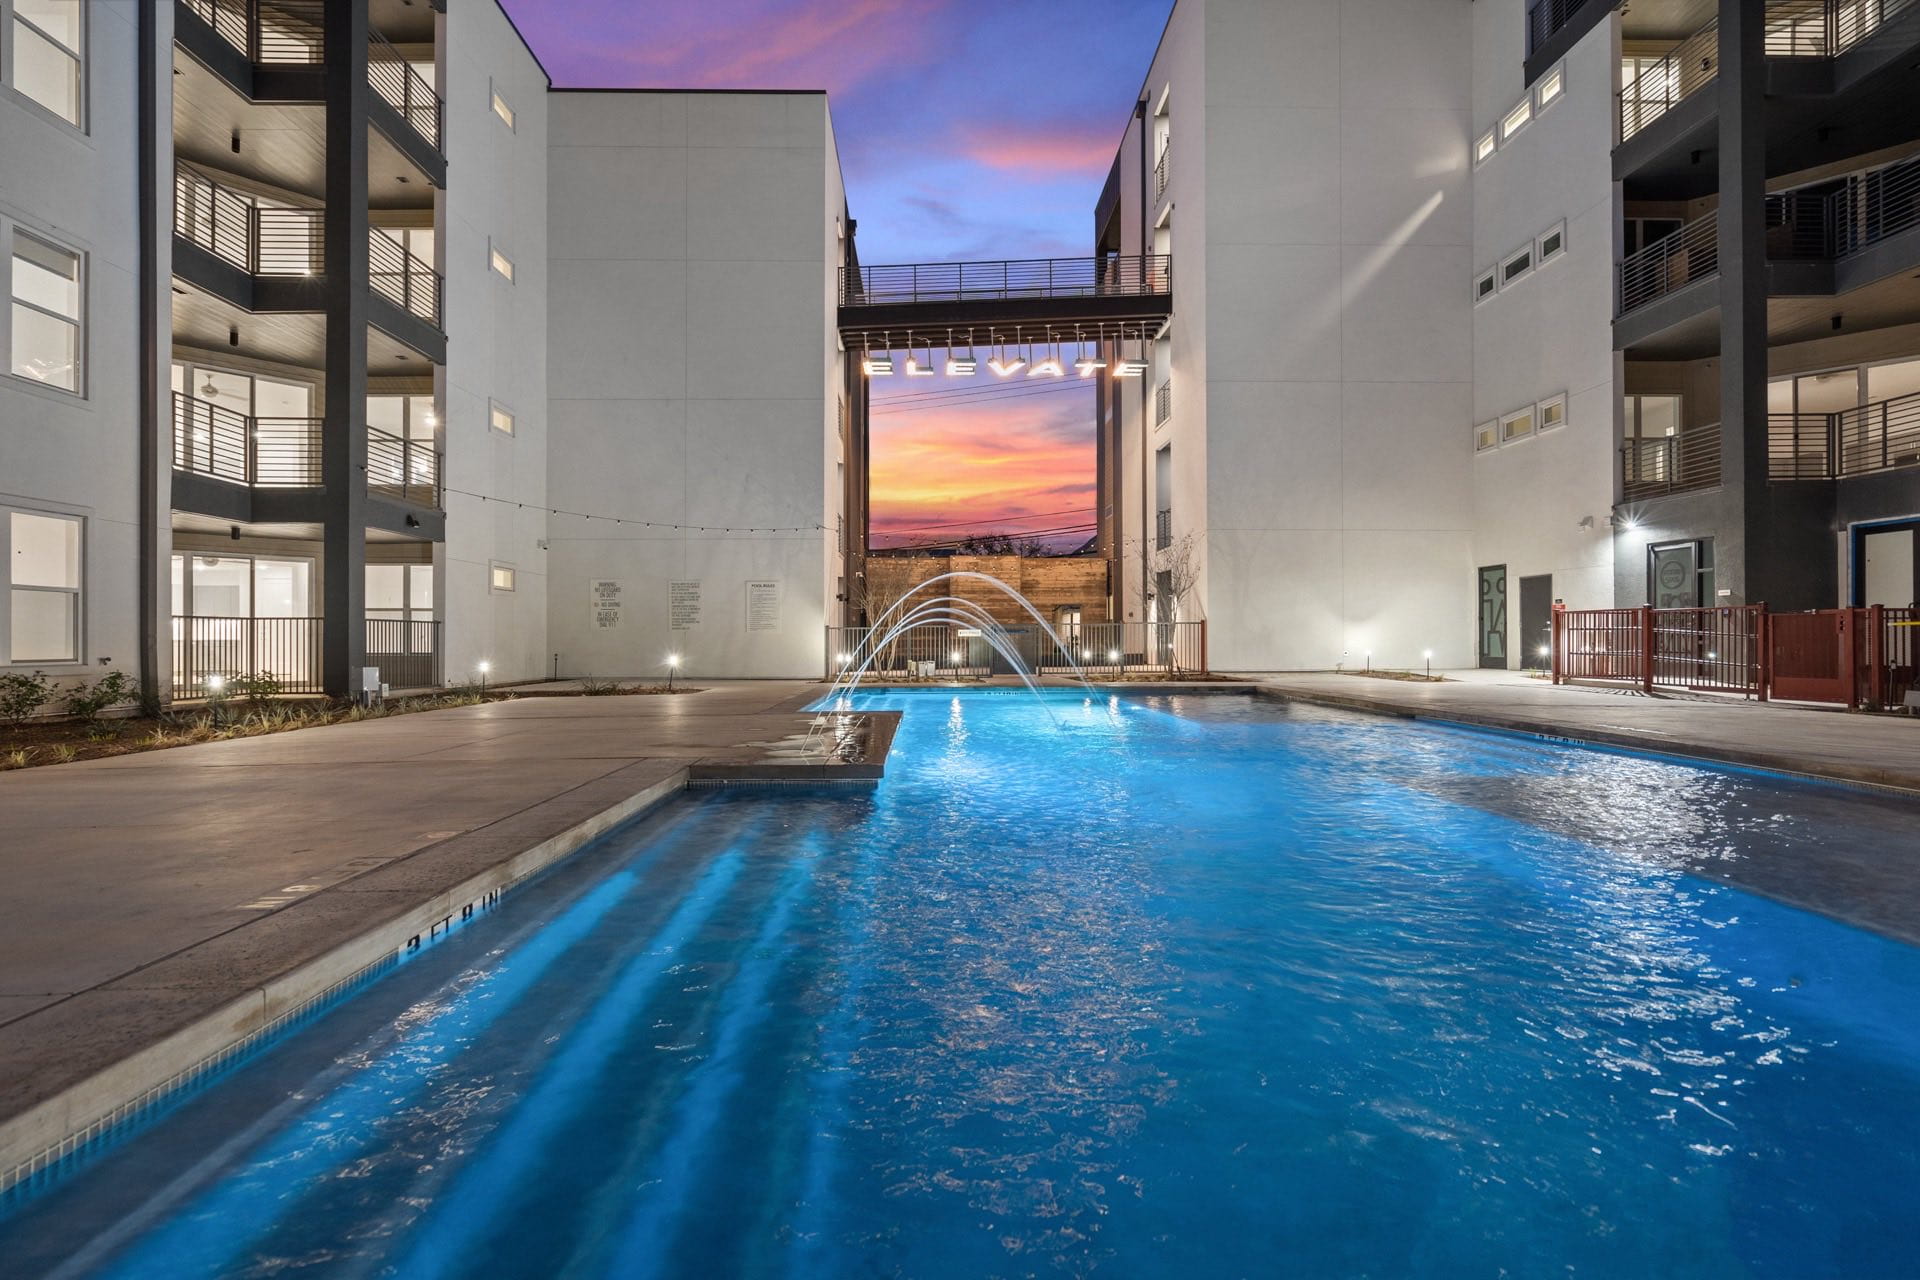 large pool in between apartment buildings